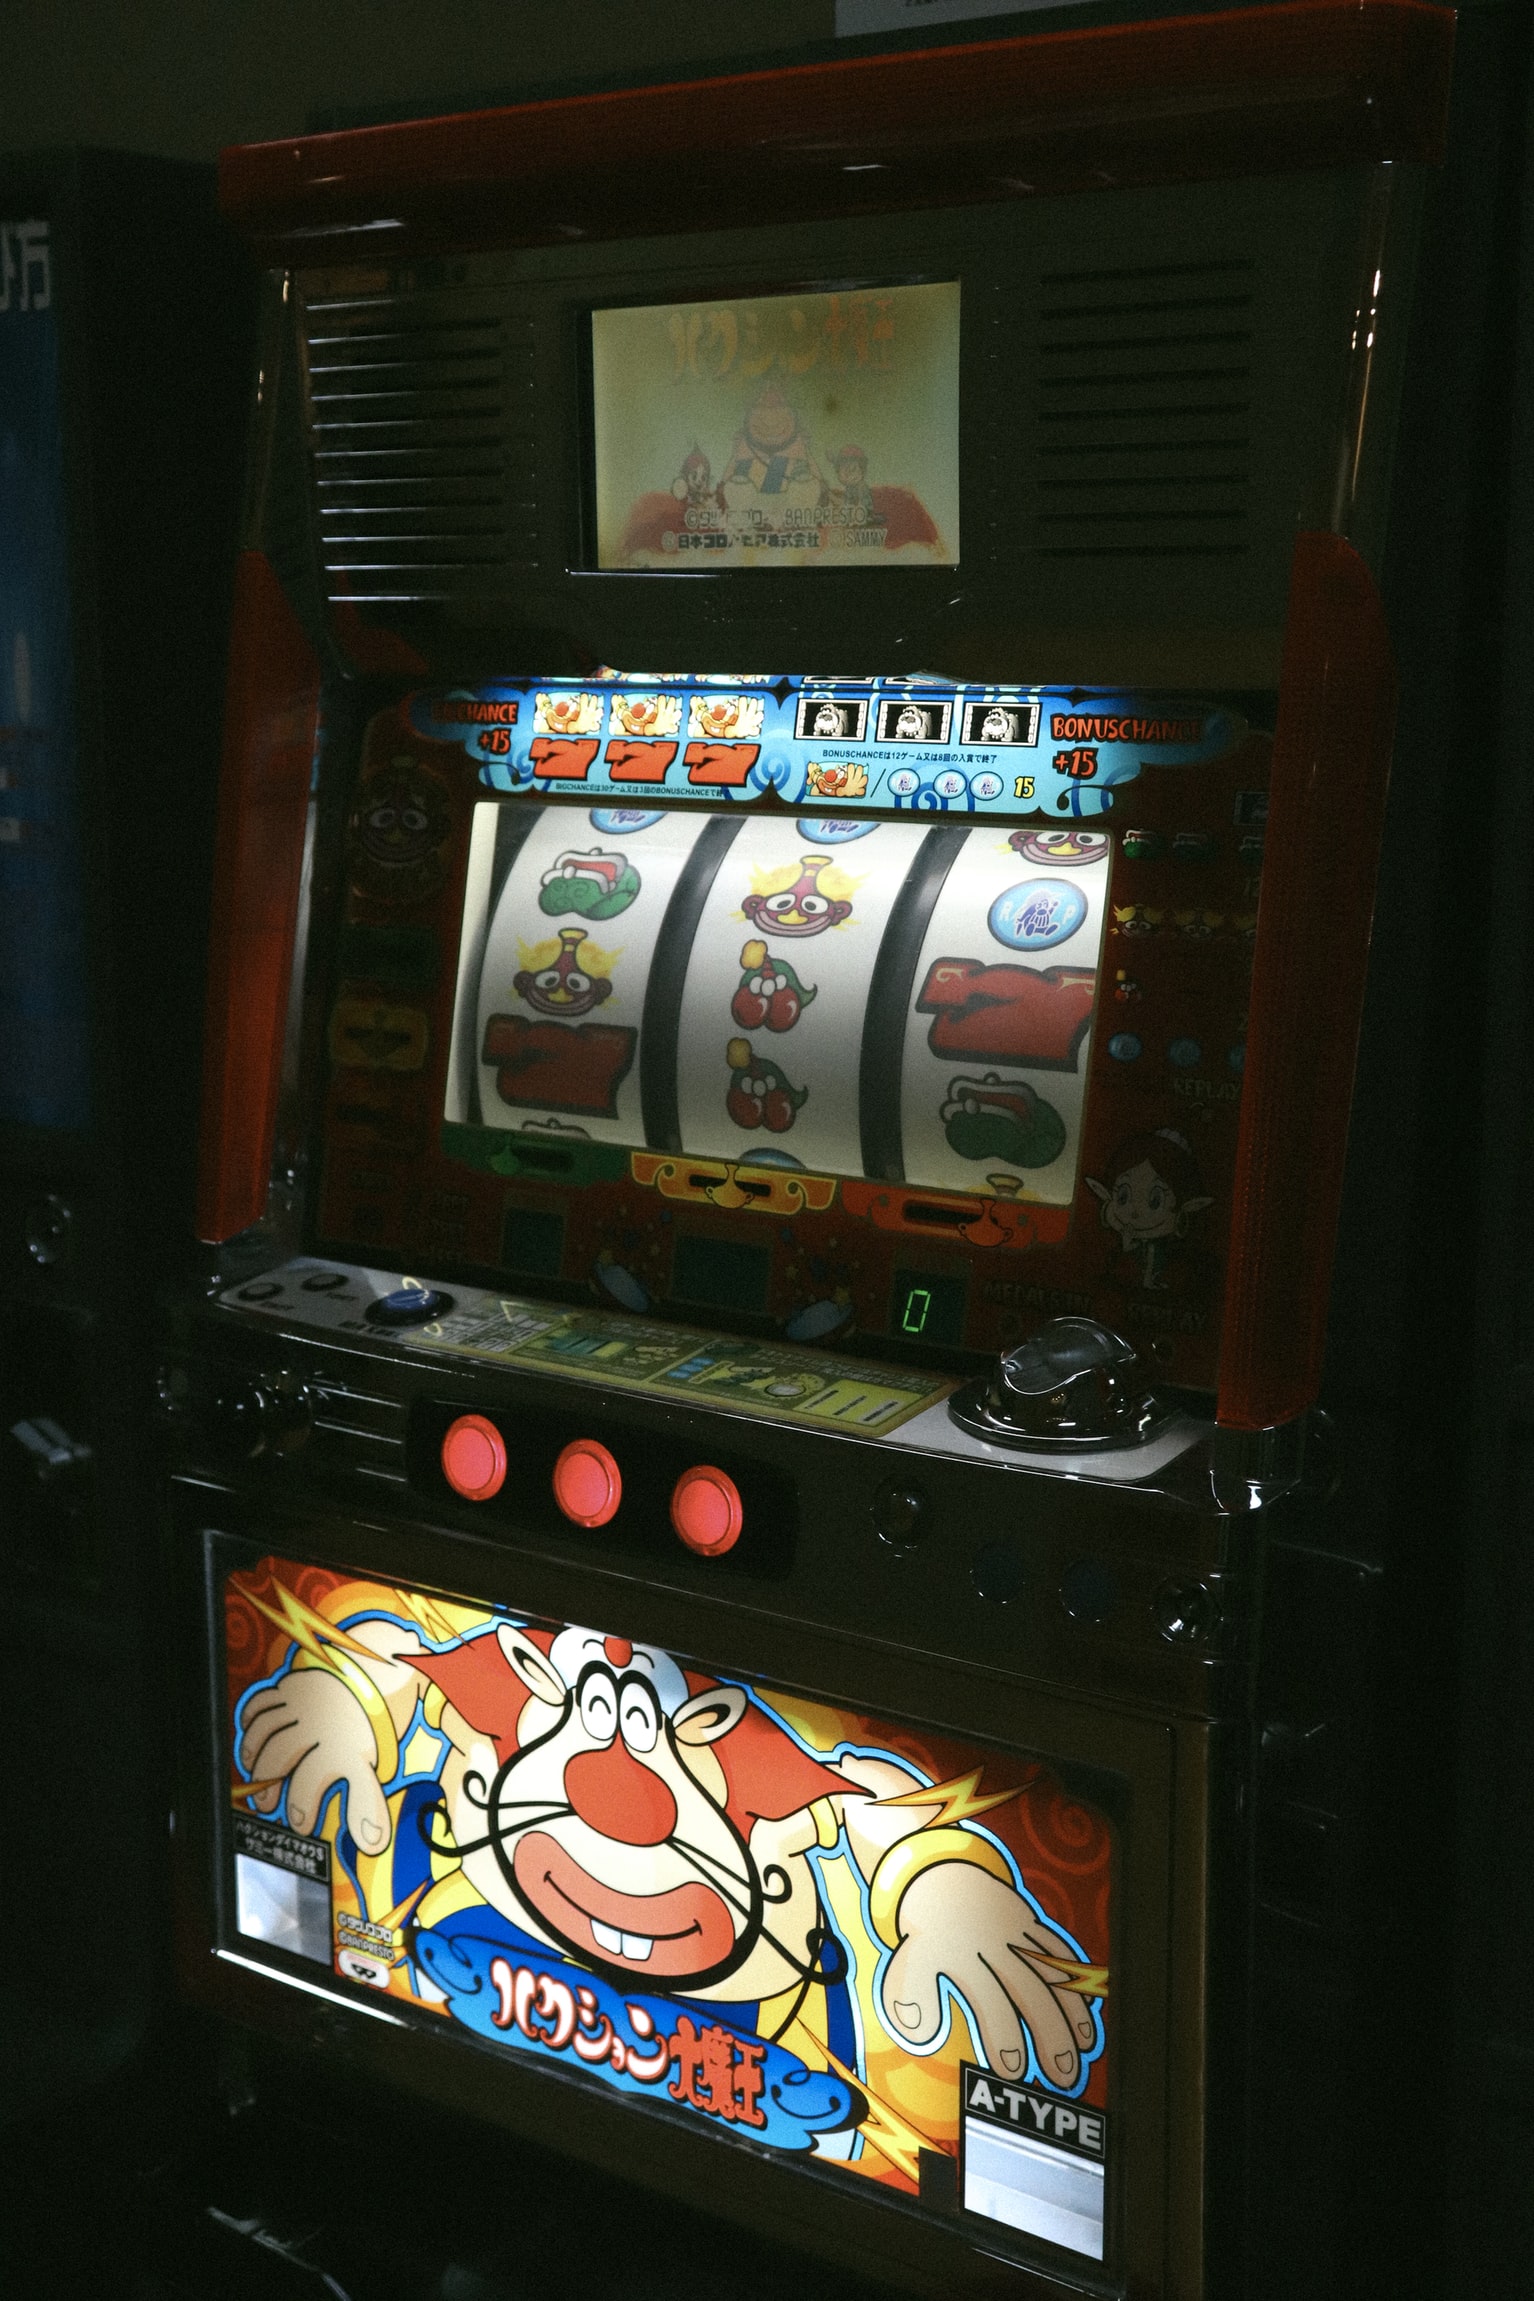 Free Money On Real Slot Machines No Deposit